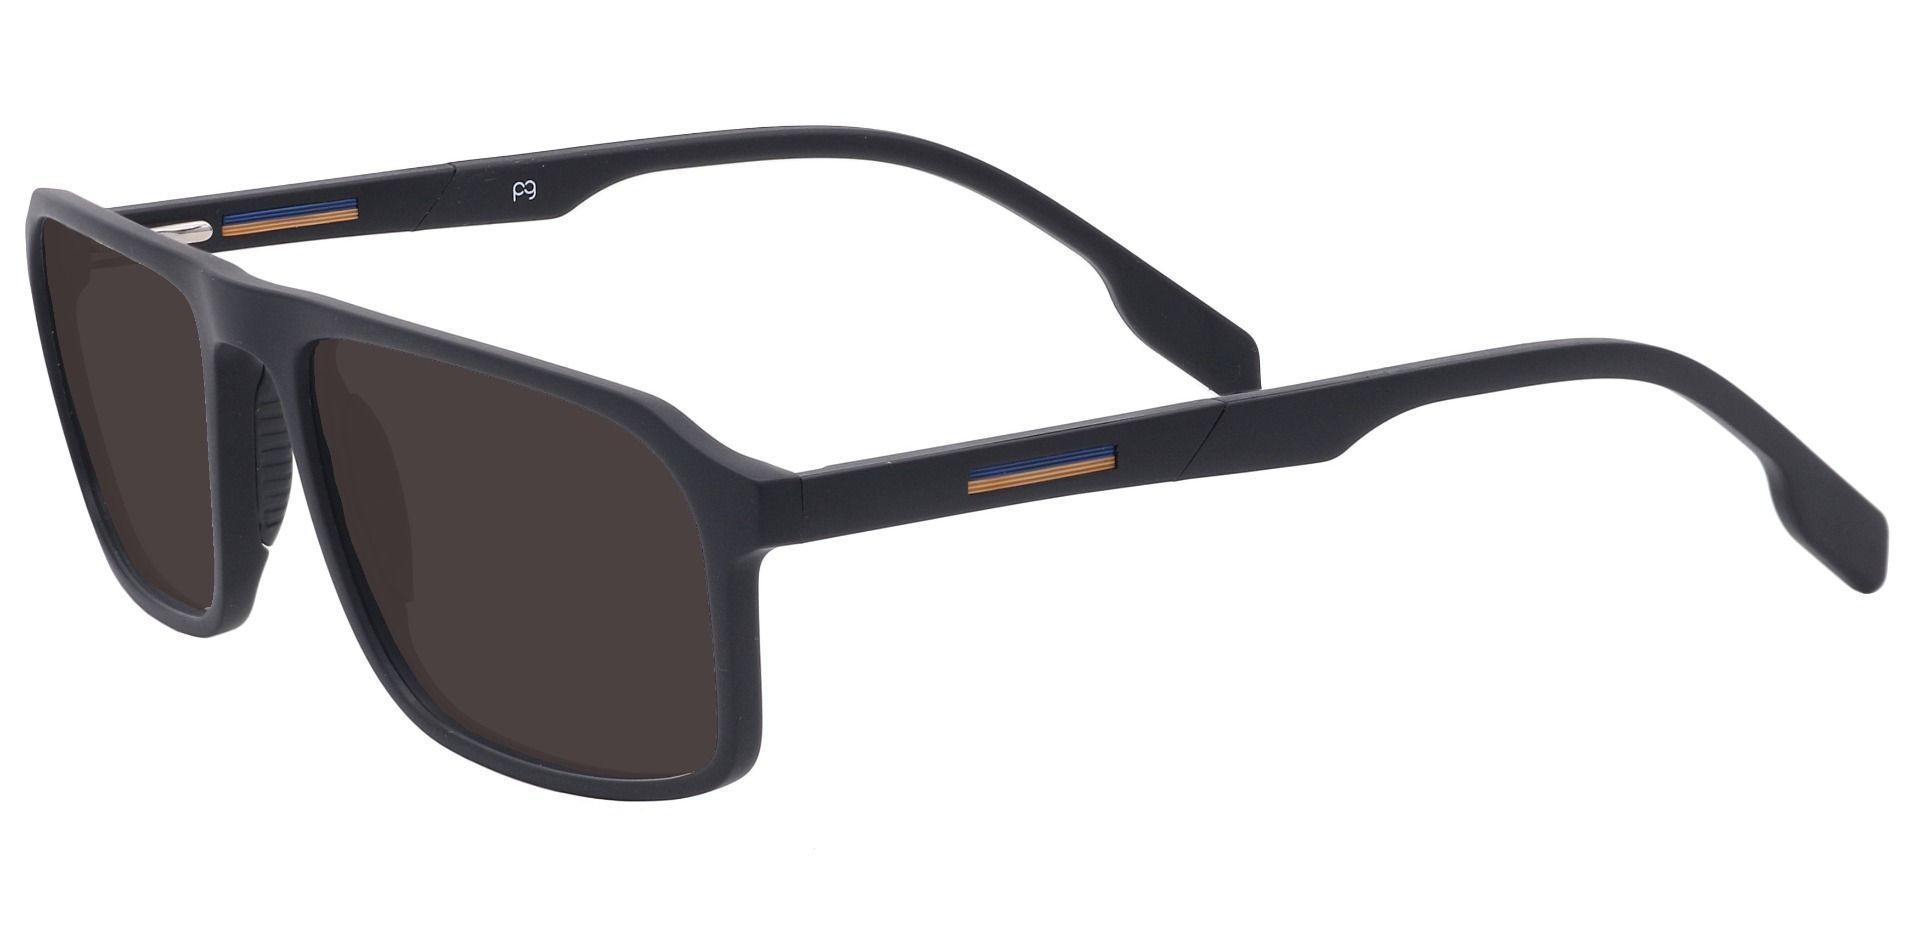 Hector Rectangle Progressive Sunglasses - Black Frame With Gray Lenses